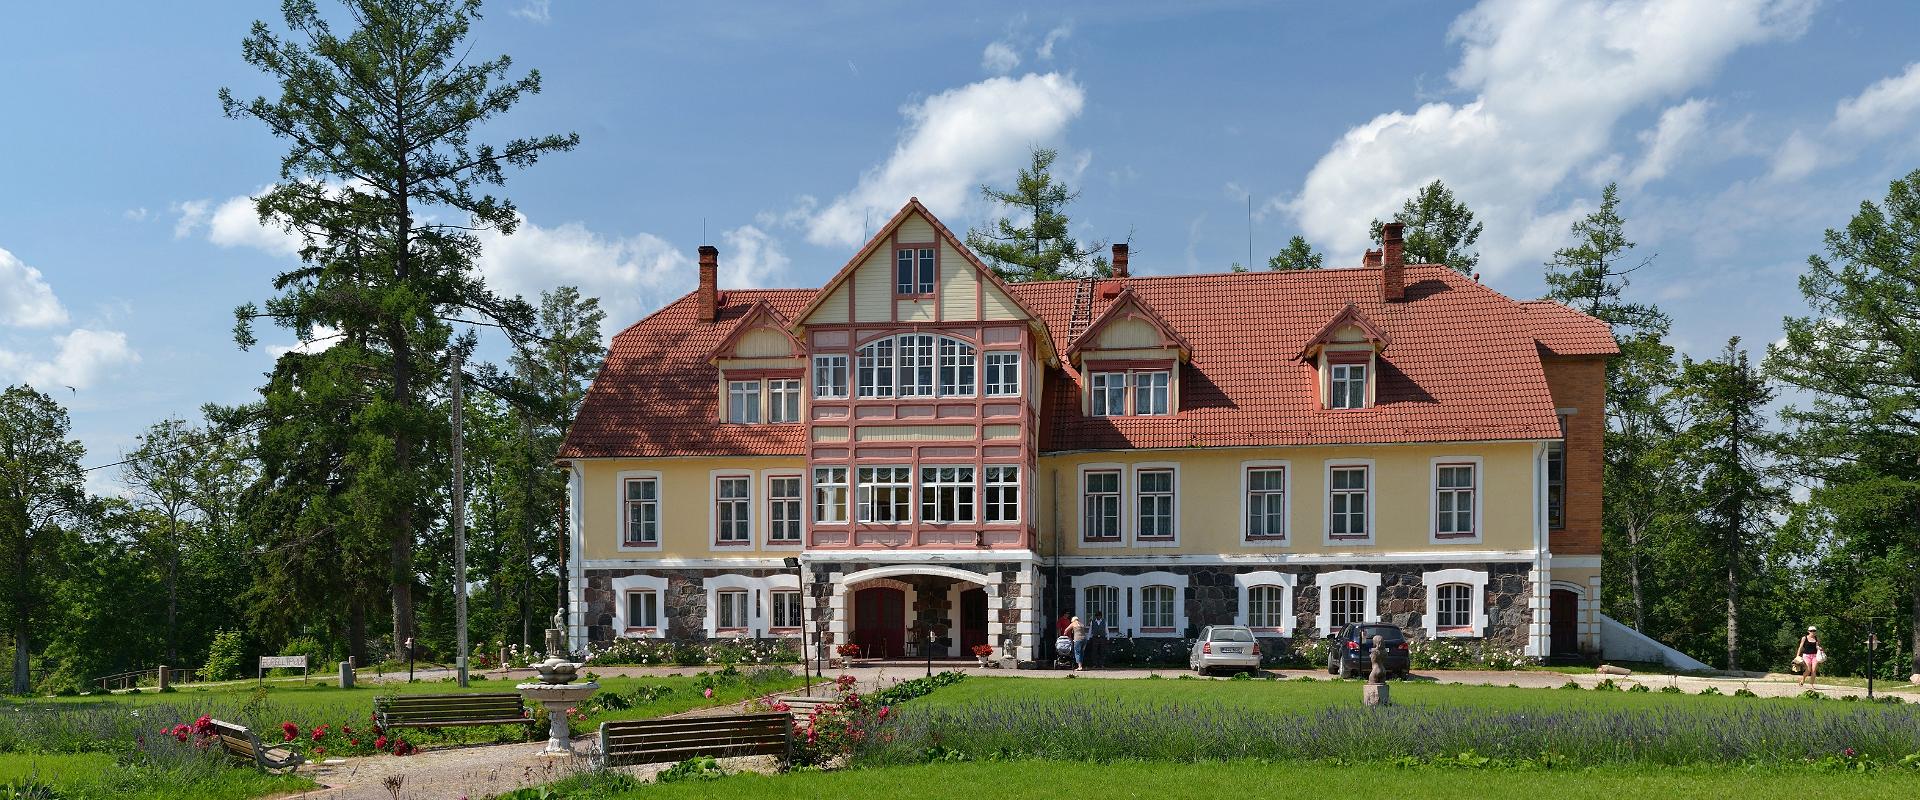 Cantervilla Castle (Pikajärve manor)